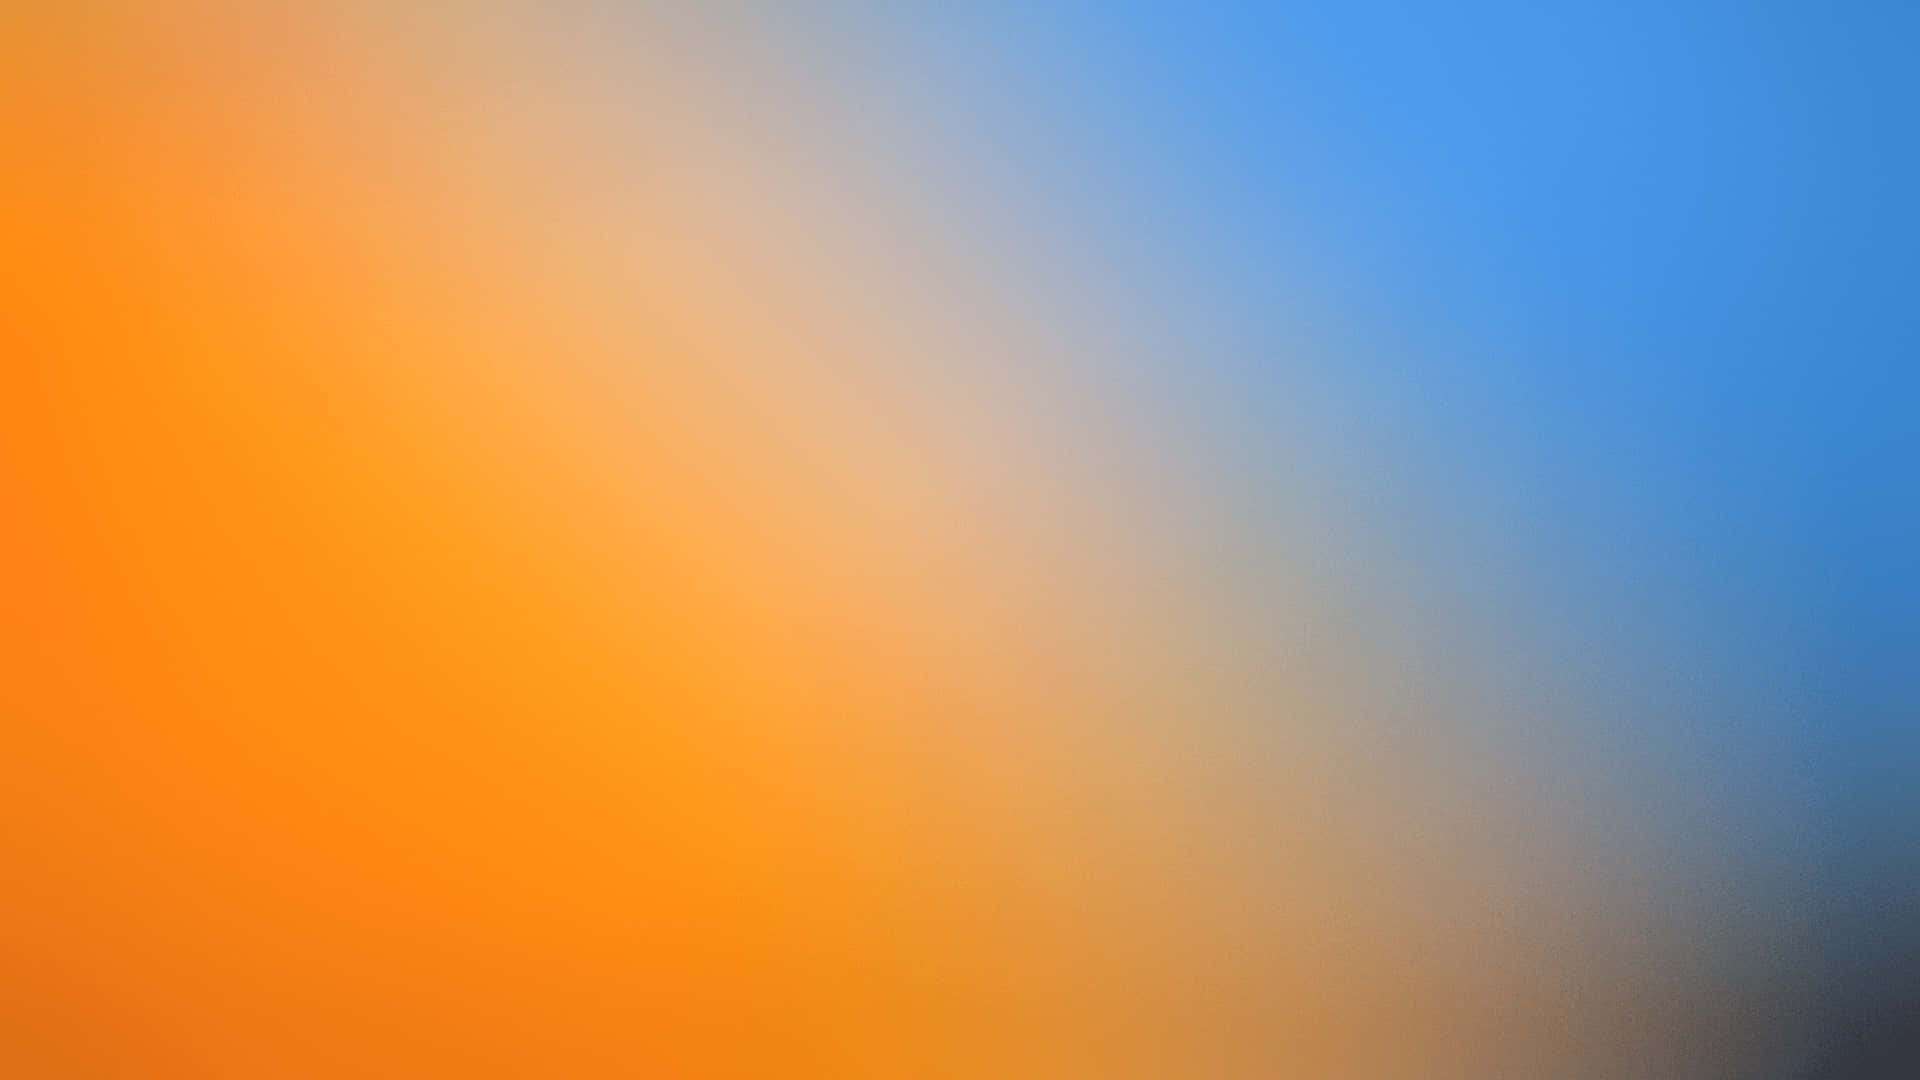 Orange And Blue Blurred Background Wallpaper